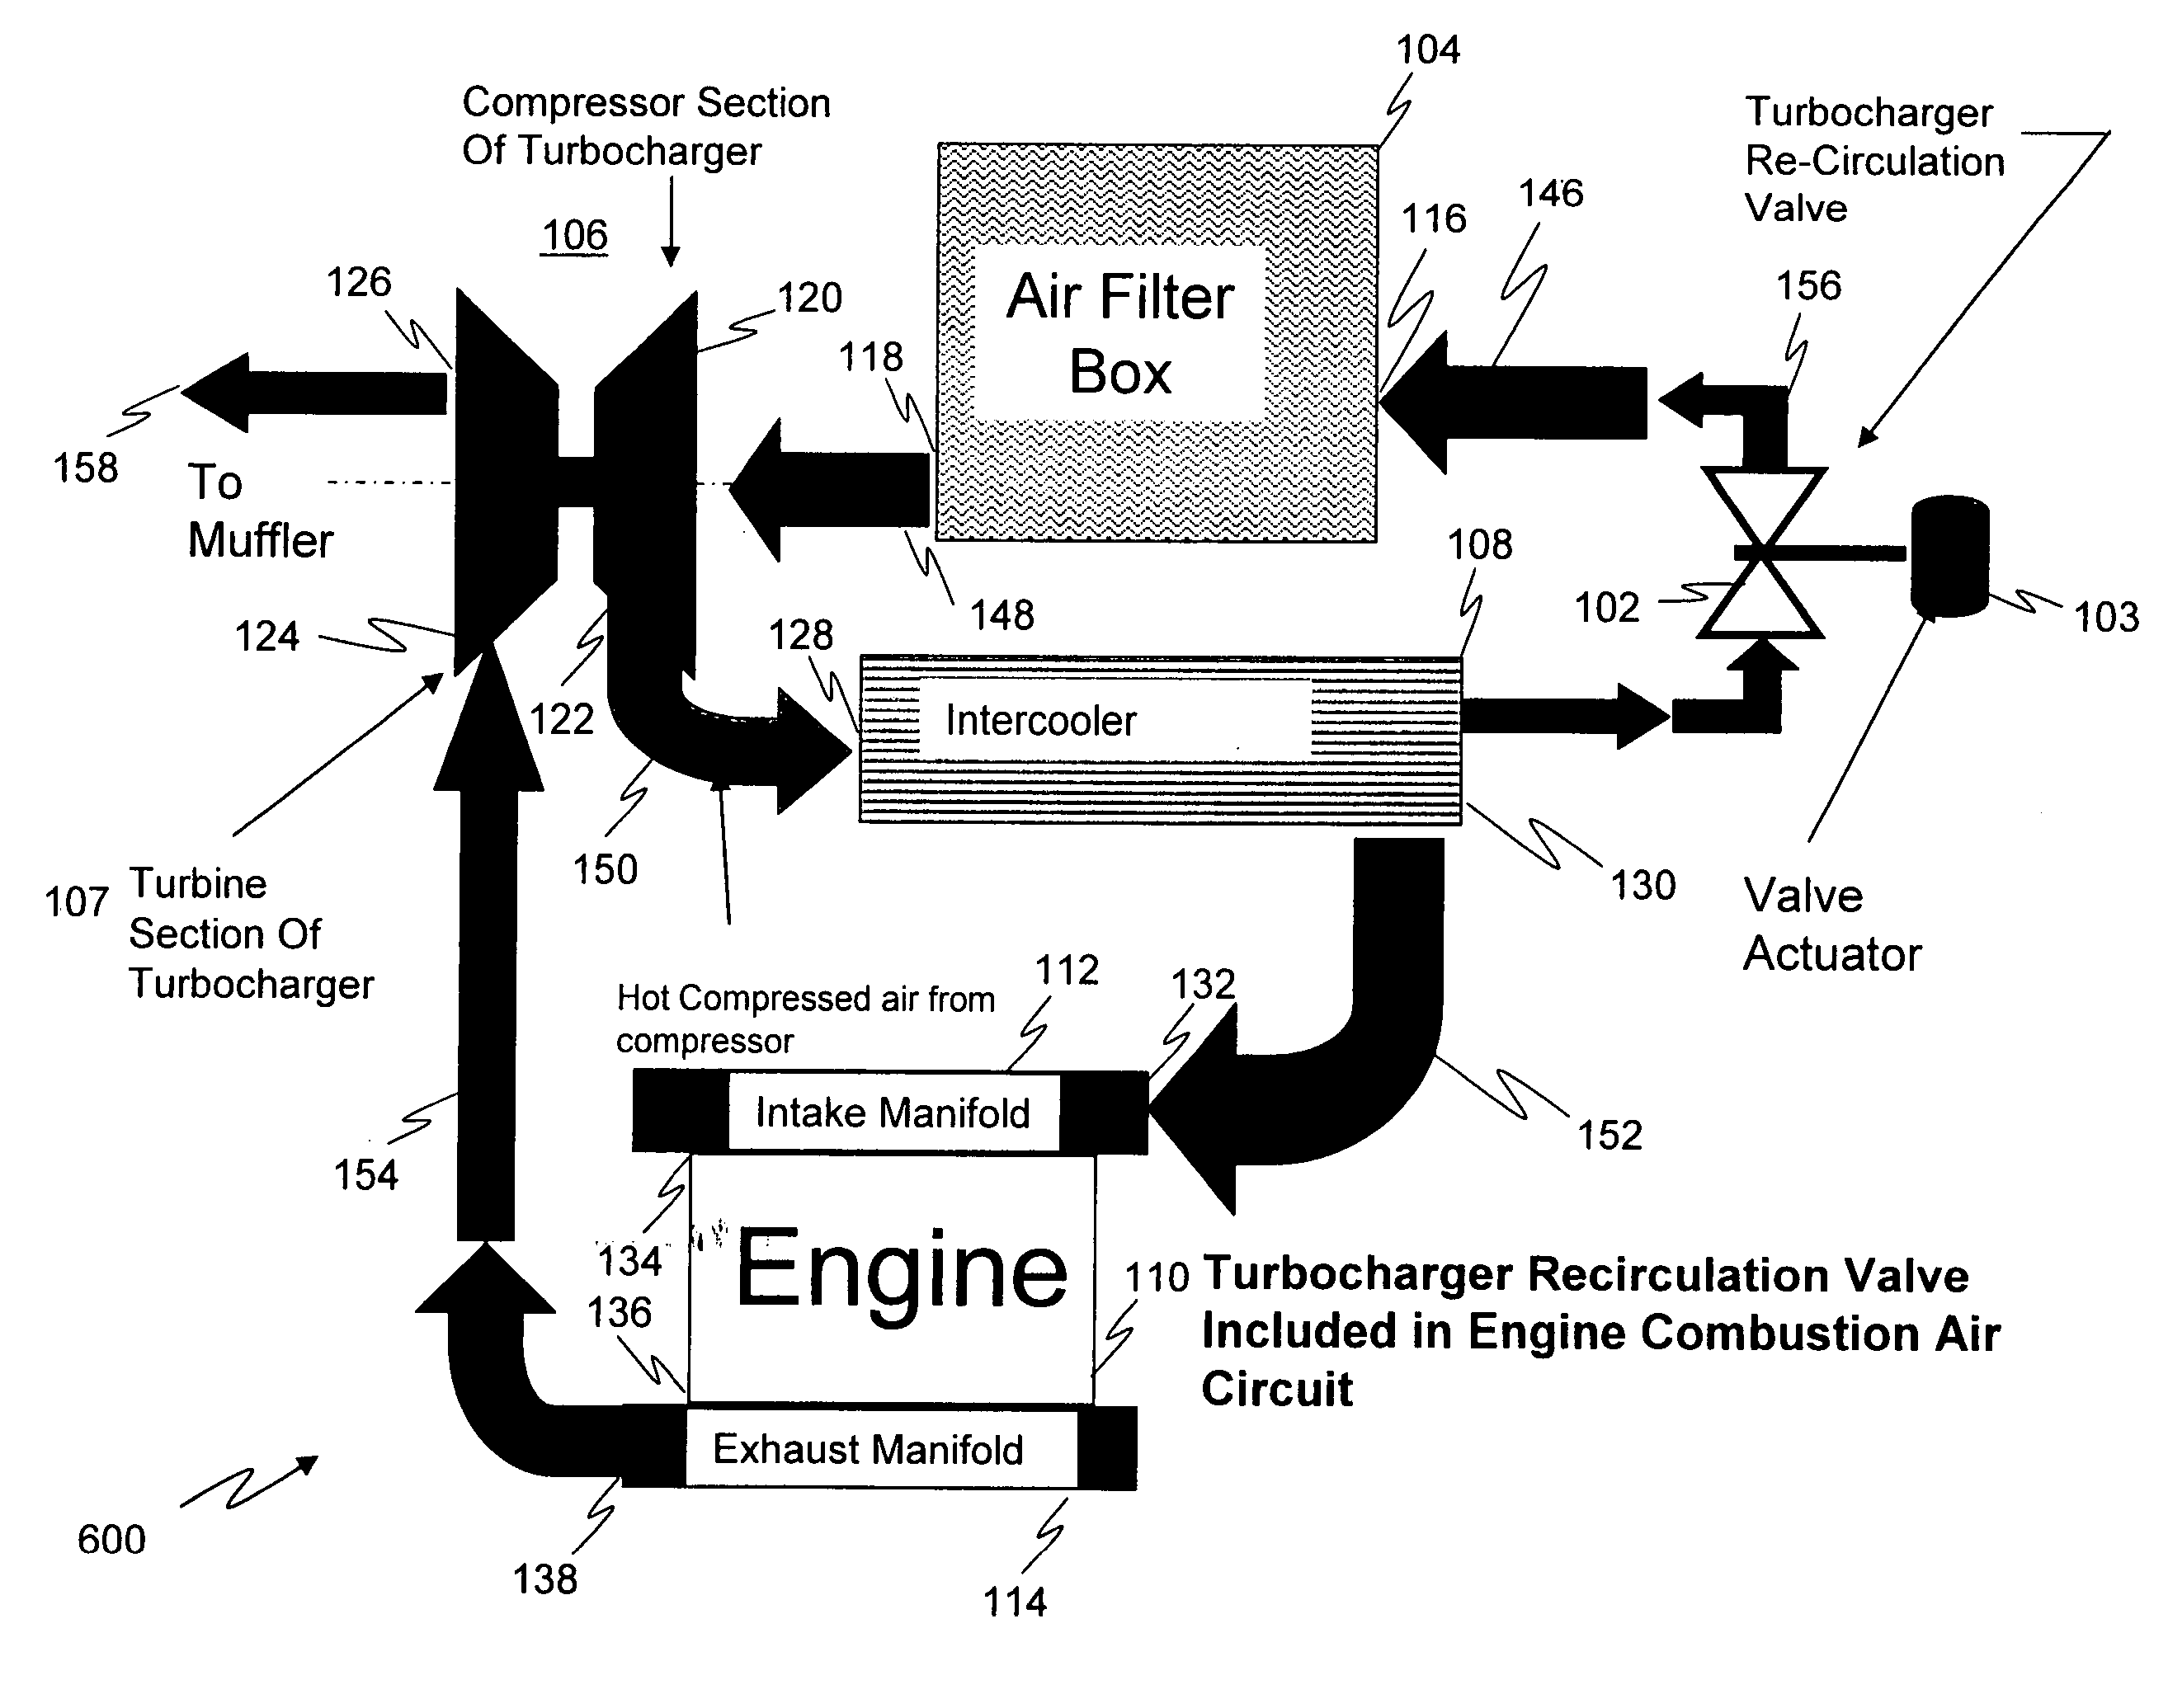 Turbocharger recirculation valve